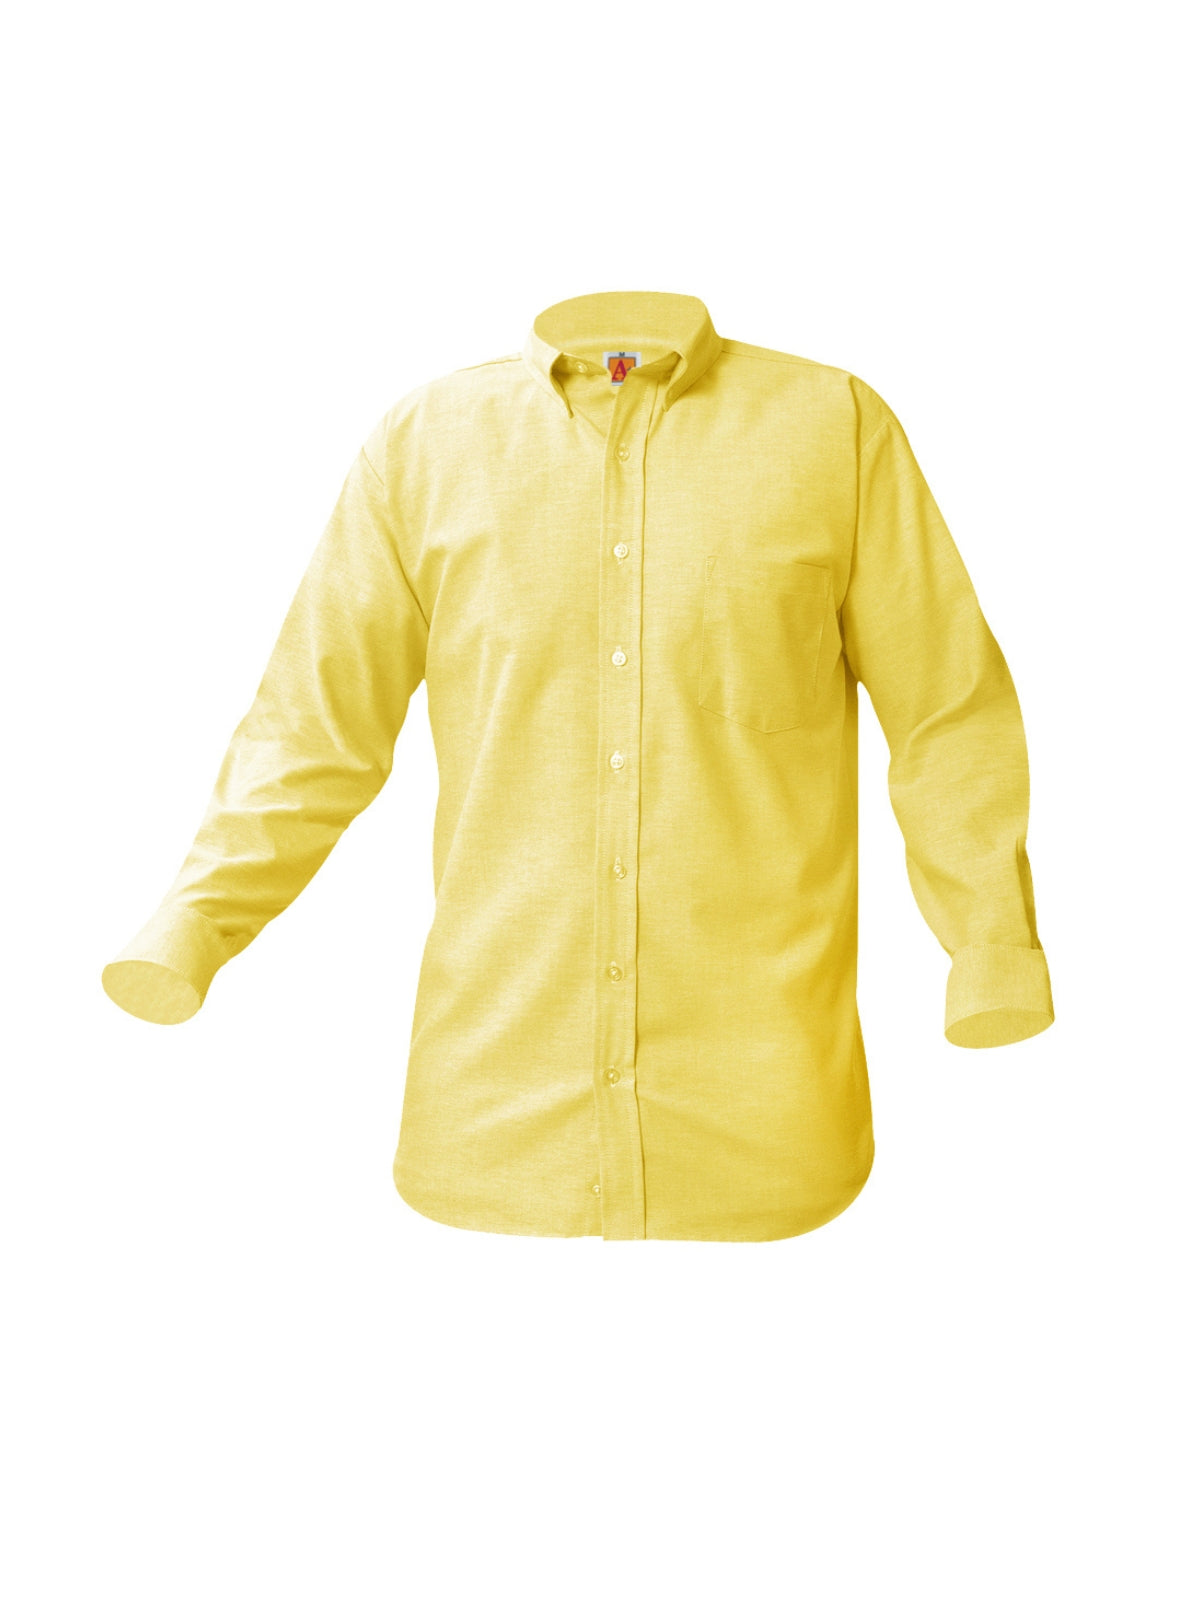 Boys' and Men's Oxford Long Sleeve Shirt - 8137 - Yellow